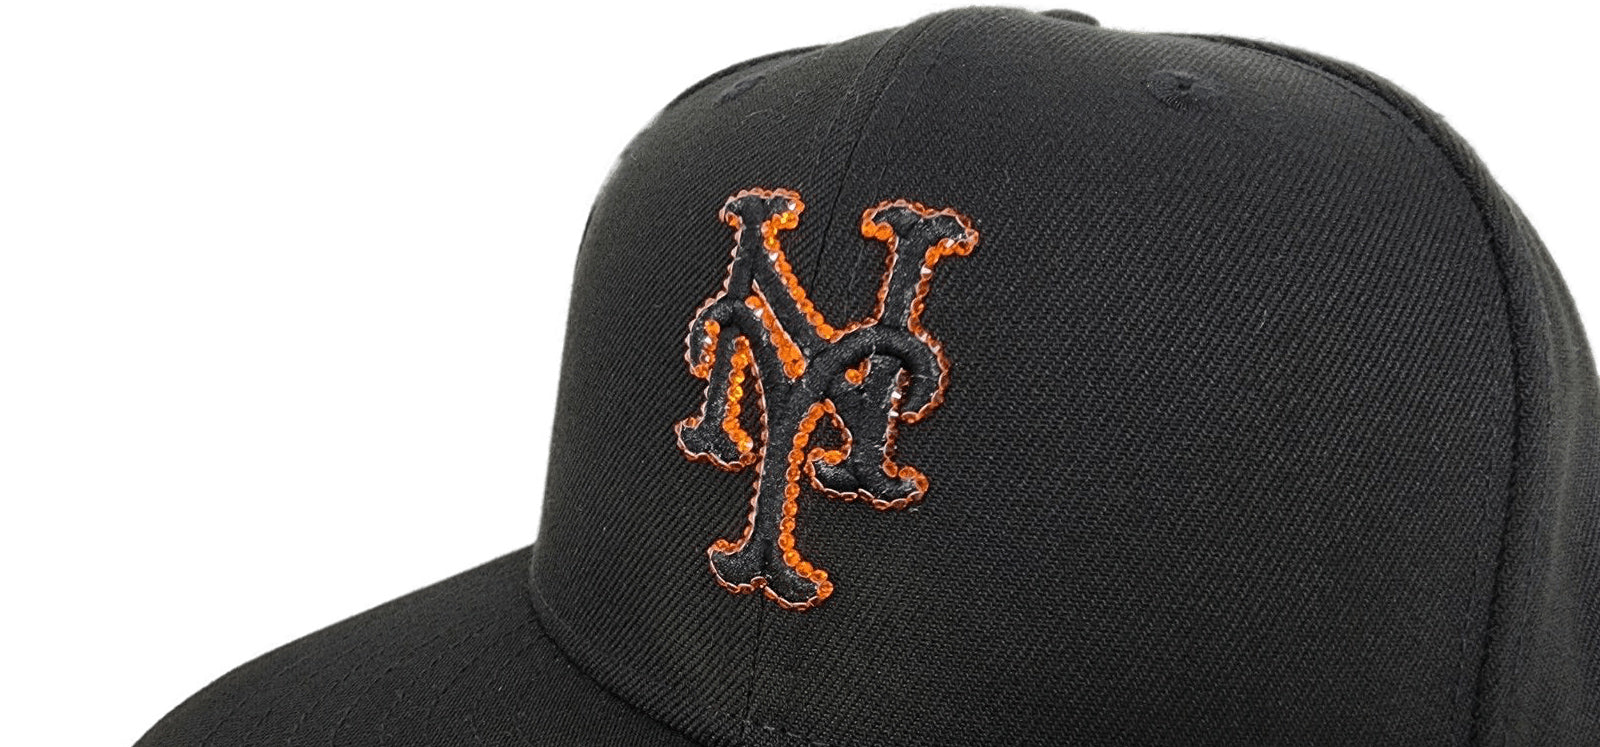 Swarovski Crystal Black New York Mets New Era 59Fifty Fitted